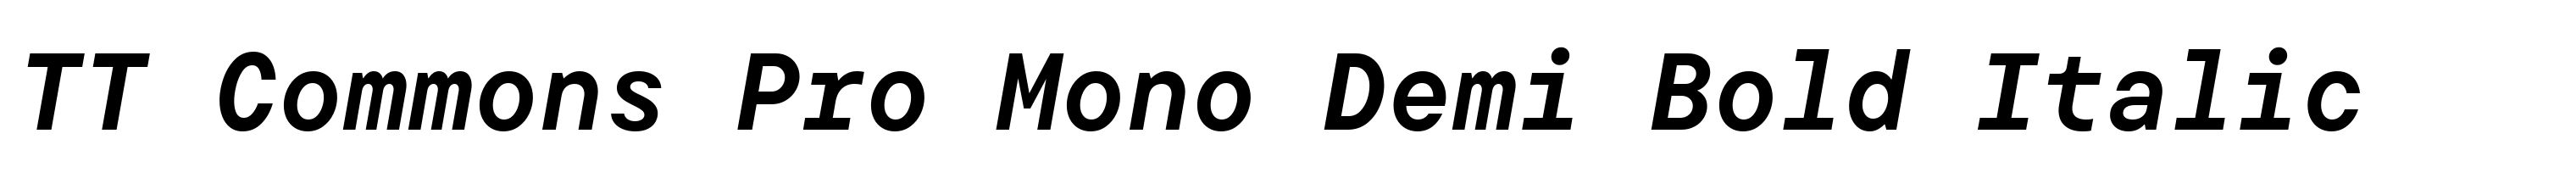 TT Commons Pro Mono Demi Bold Italic